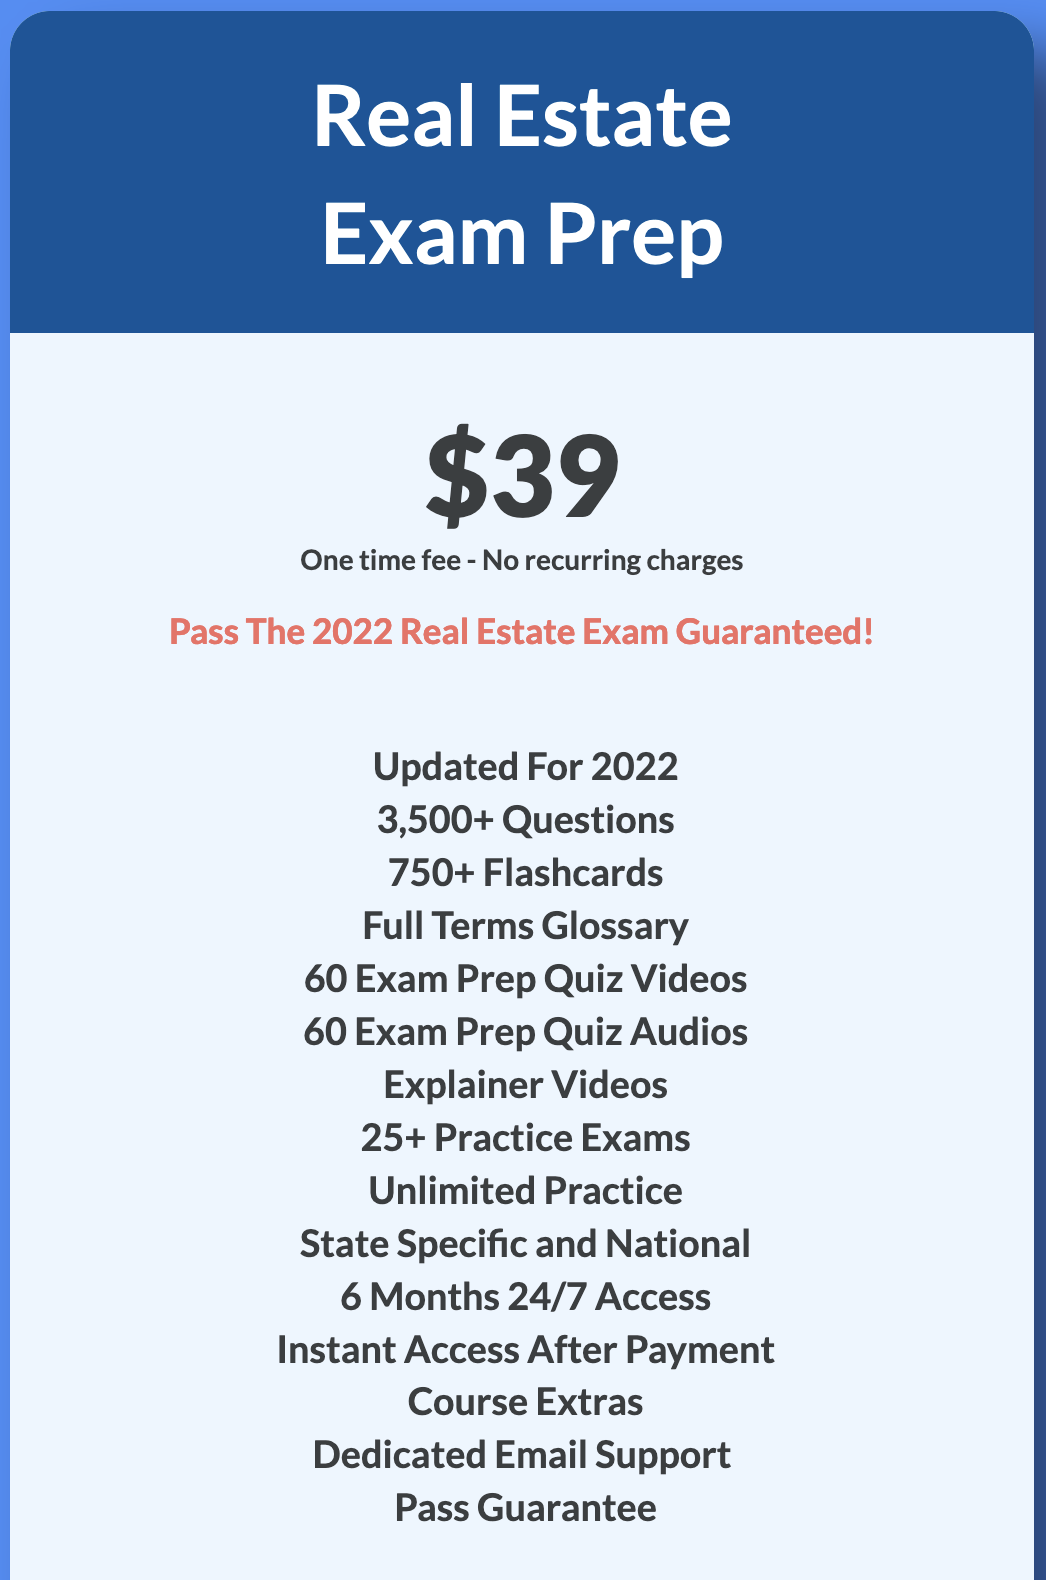 Real Estate Exam Scholar Pricing Review